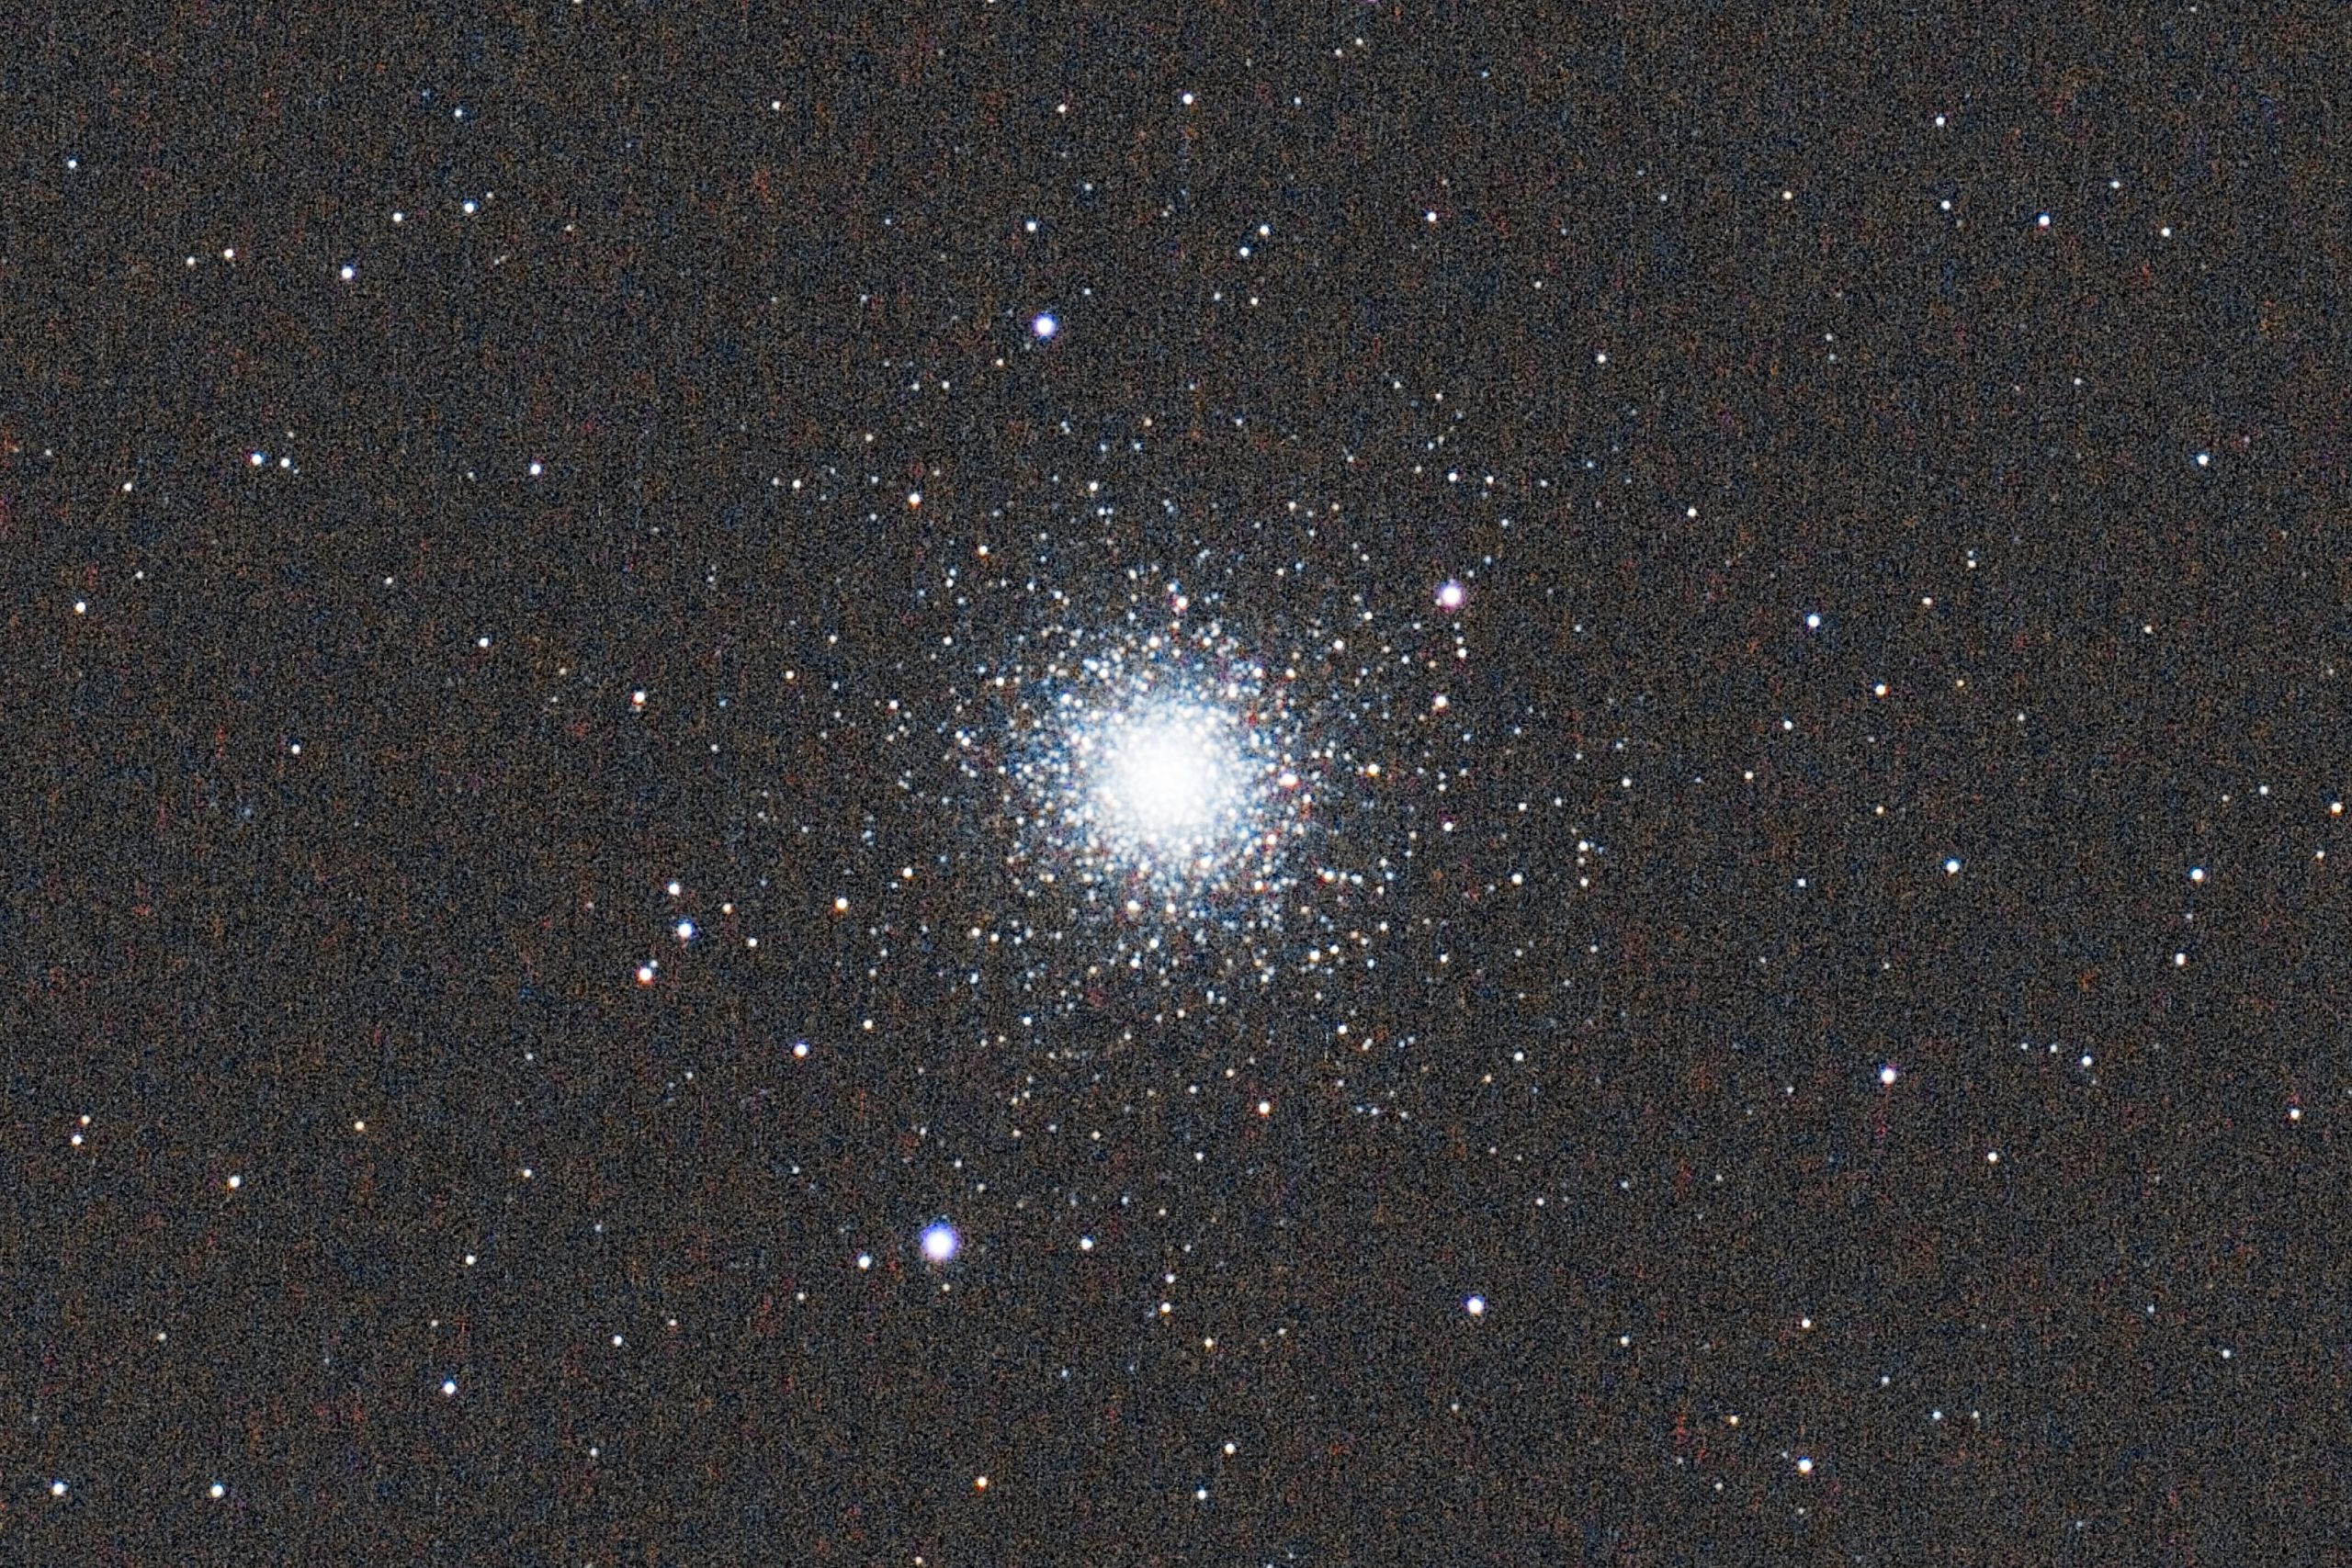 M3 star cluster